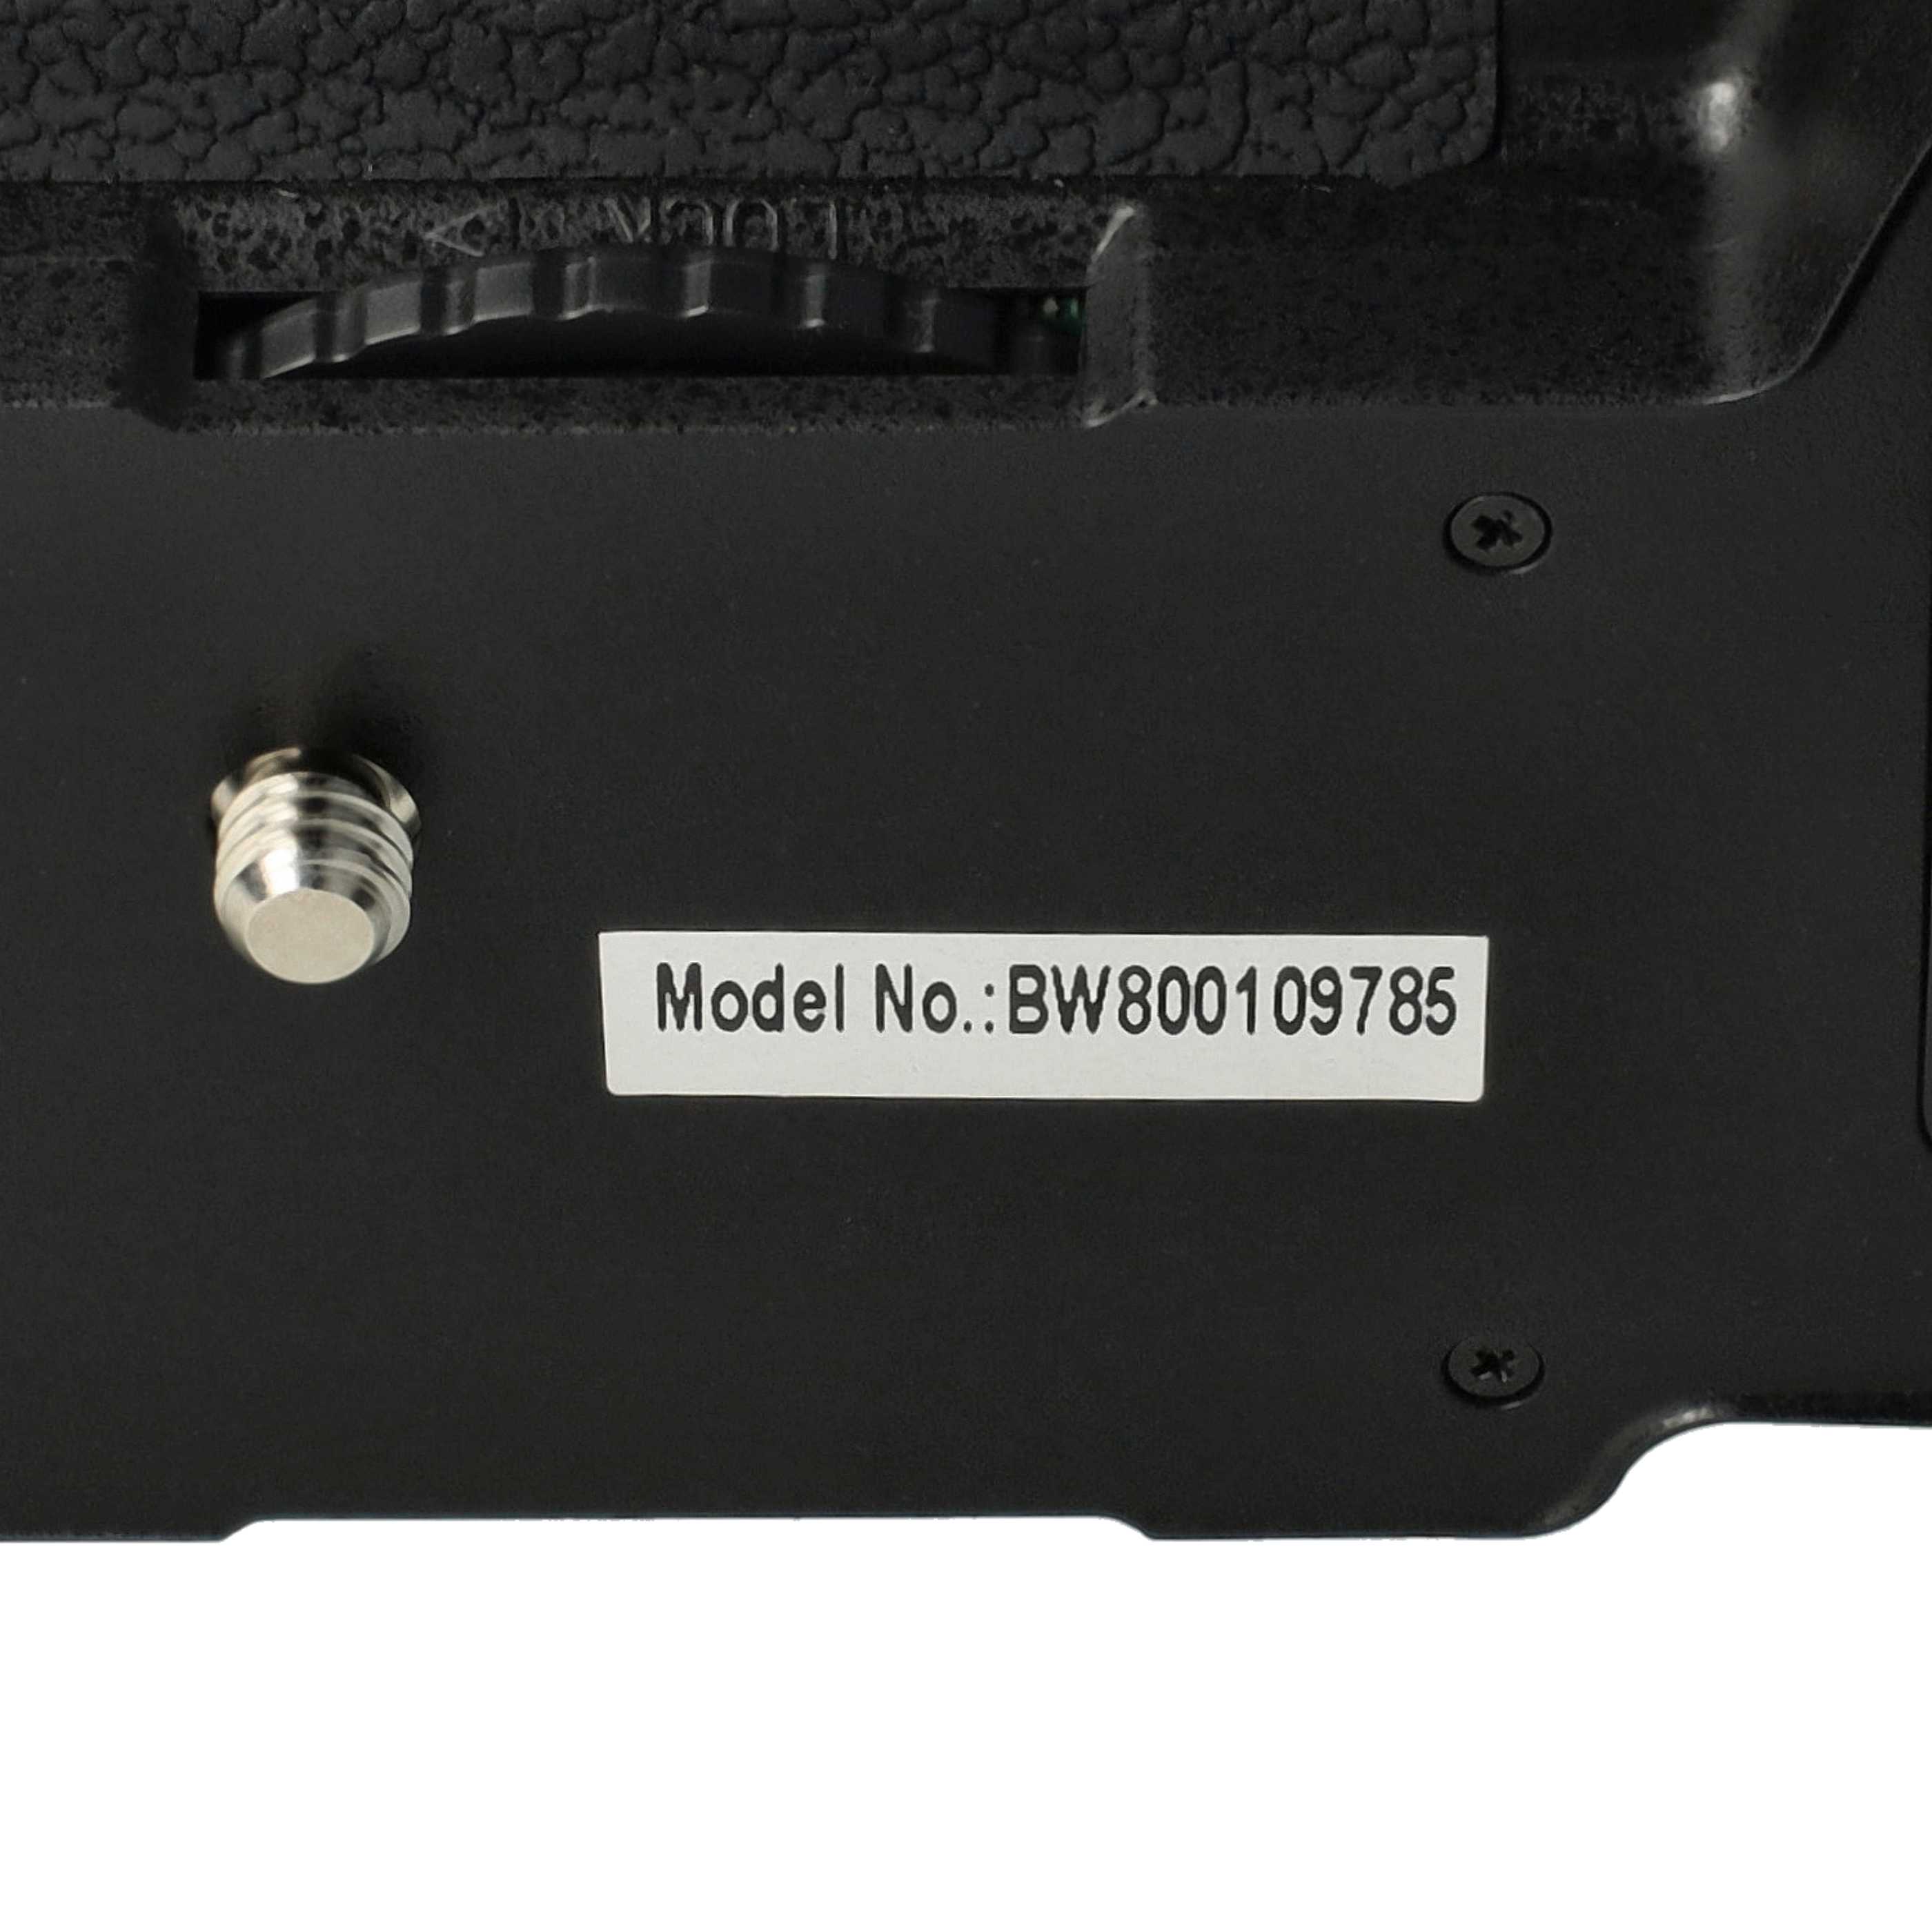 Empuñadura de batería para camara Nikon D5100, D5200, D5300 - incl. rueda selectora, incl. disparador